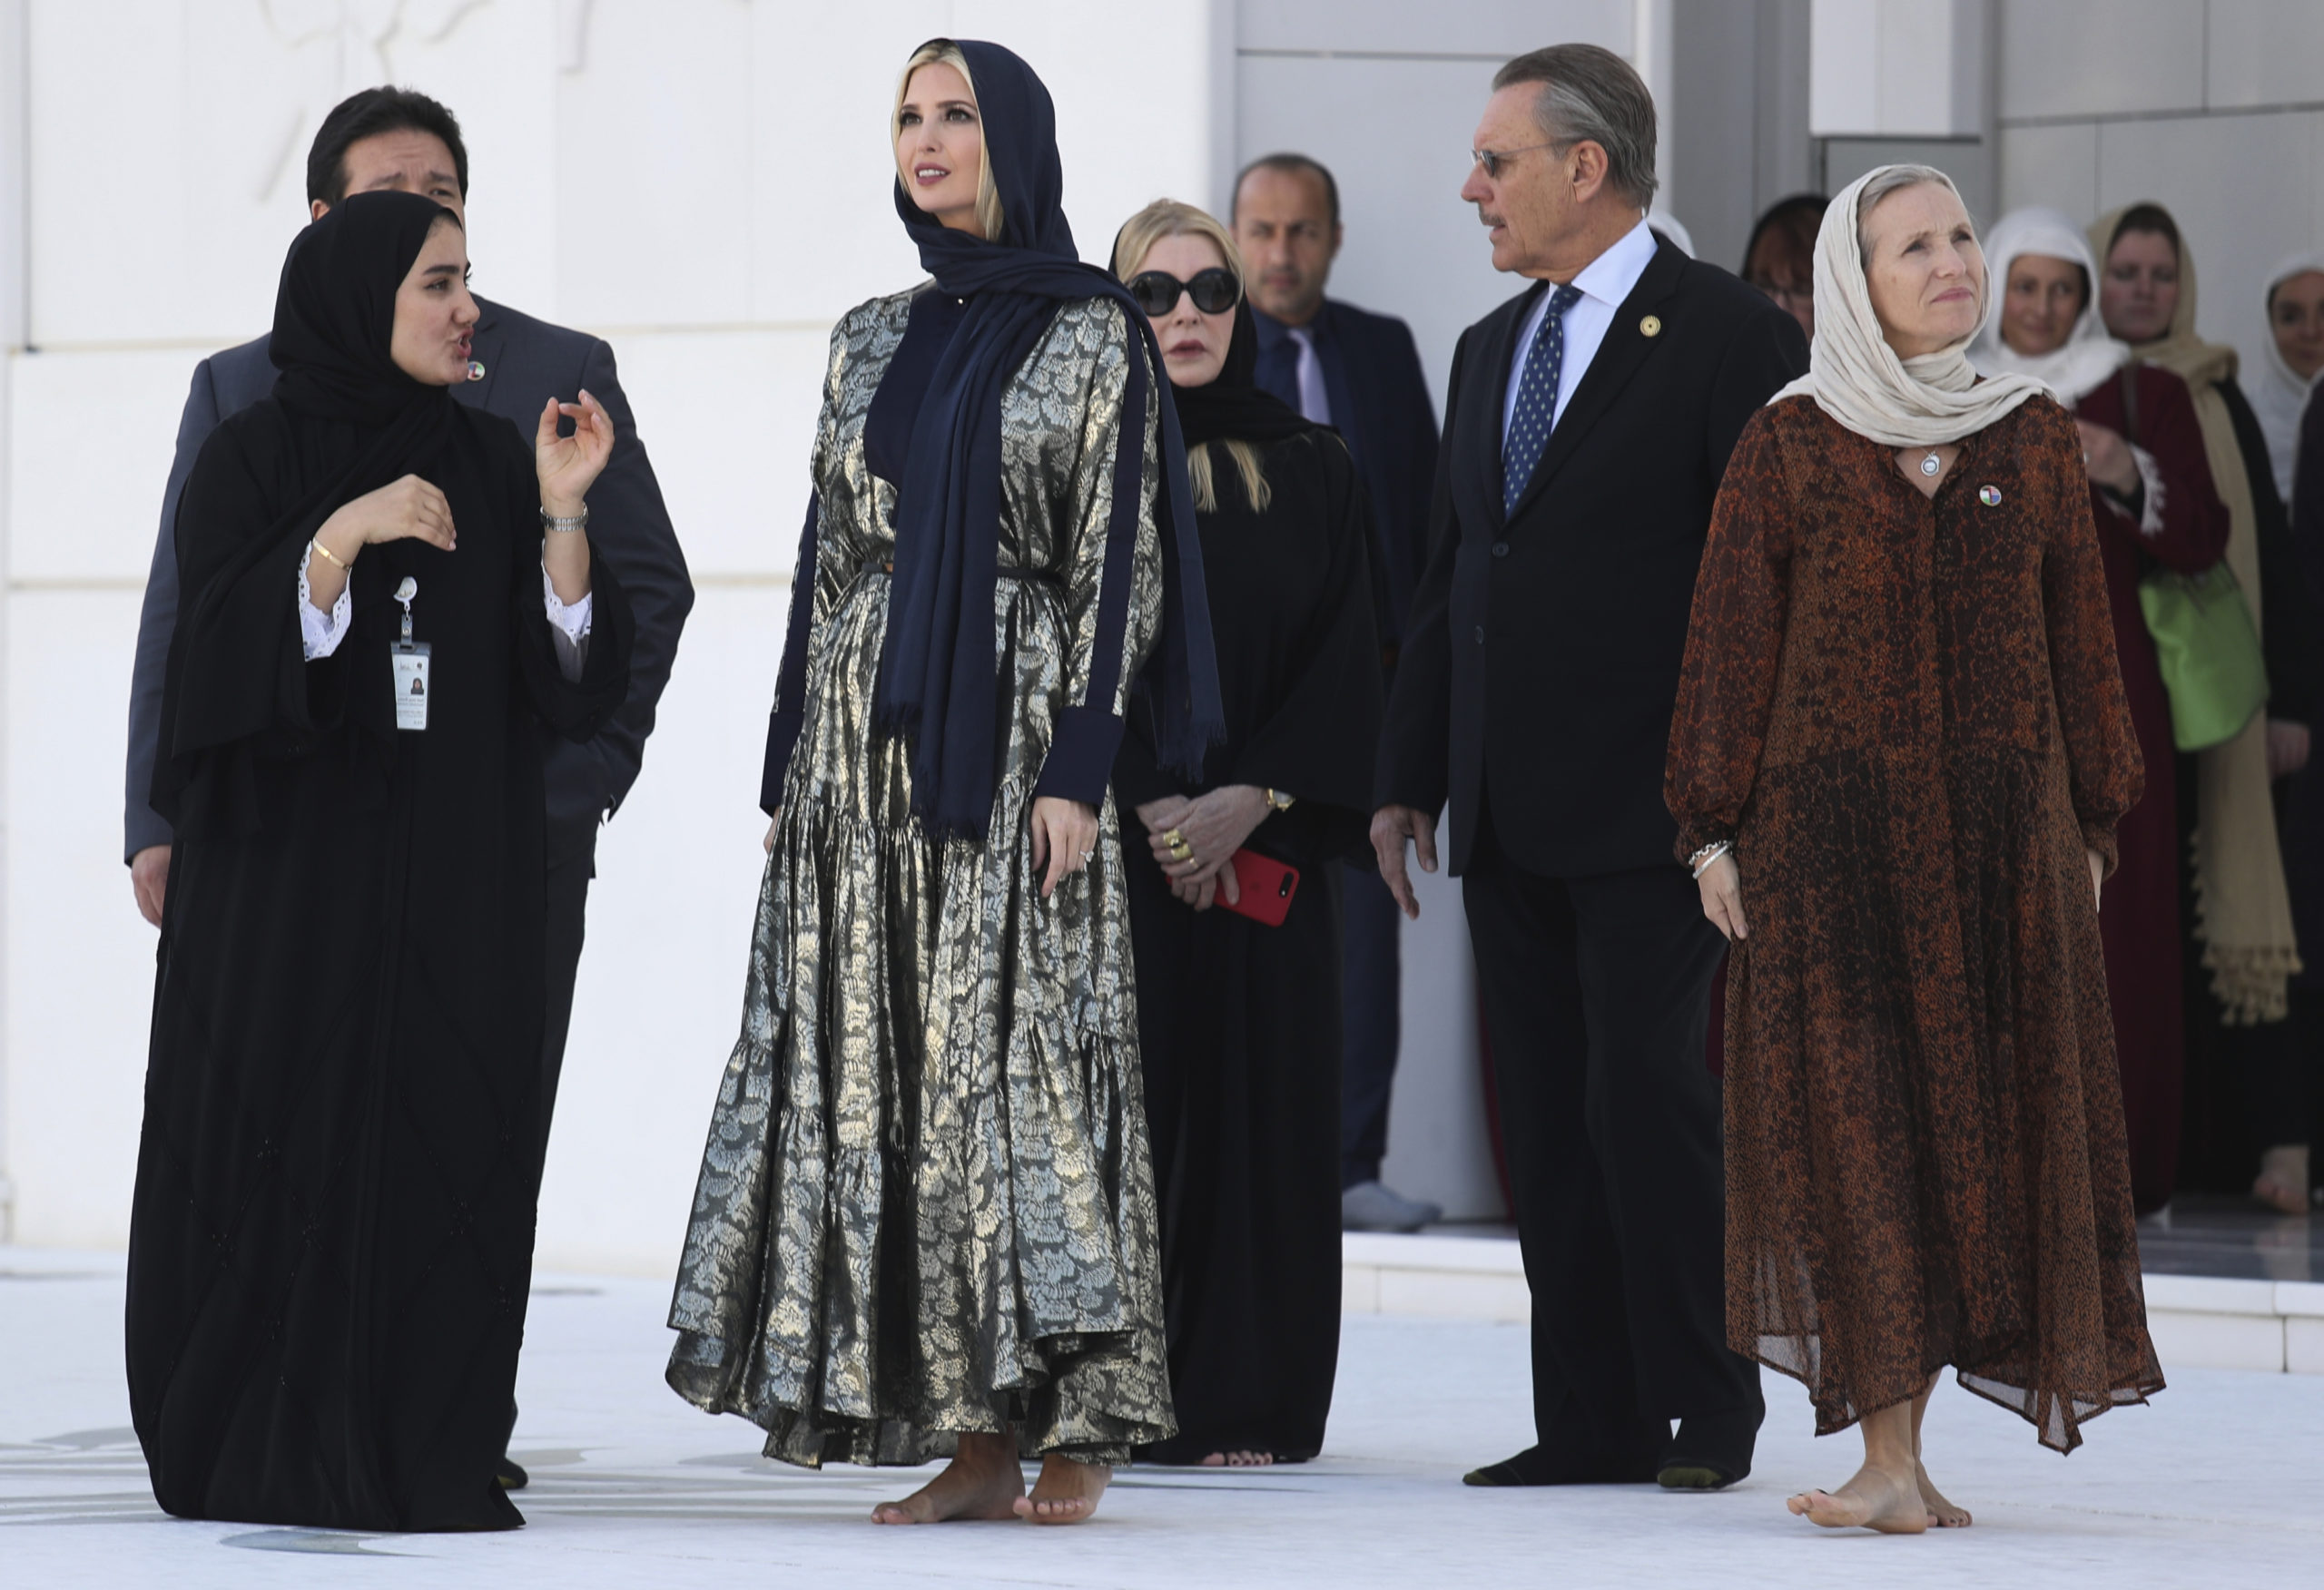 https://www.oldsite.bolnews.com/international/2020/02/ivanka-trump-tours-sheikh-zayed-grand-mosque-ahead-of-the-global-womens-forum/